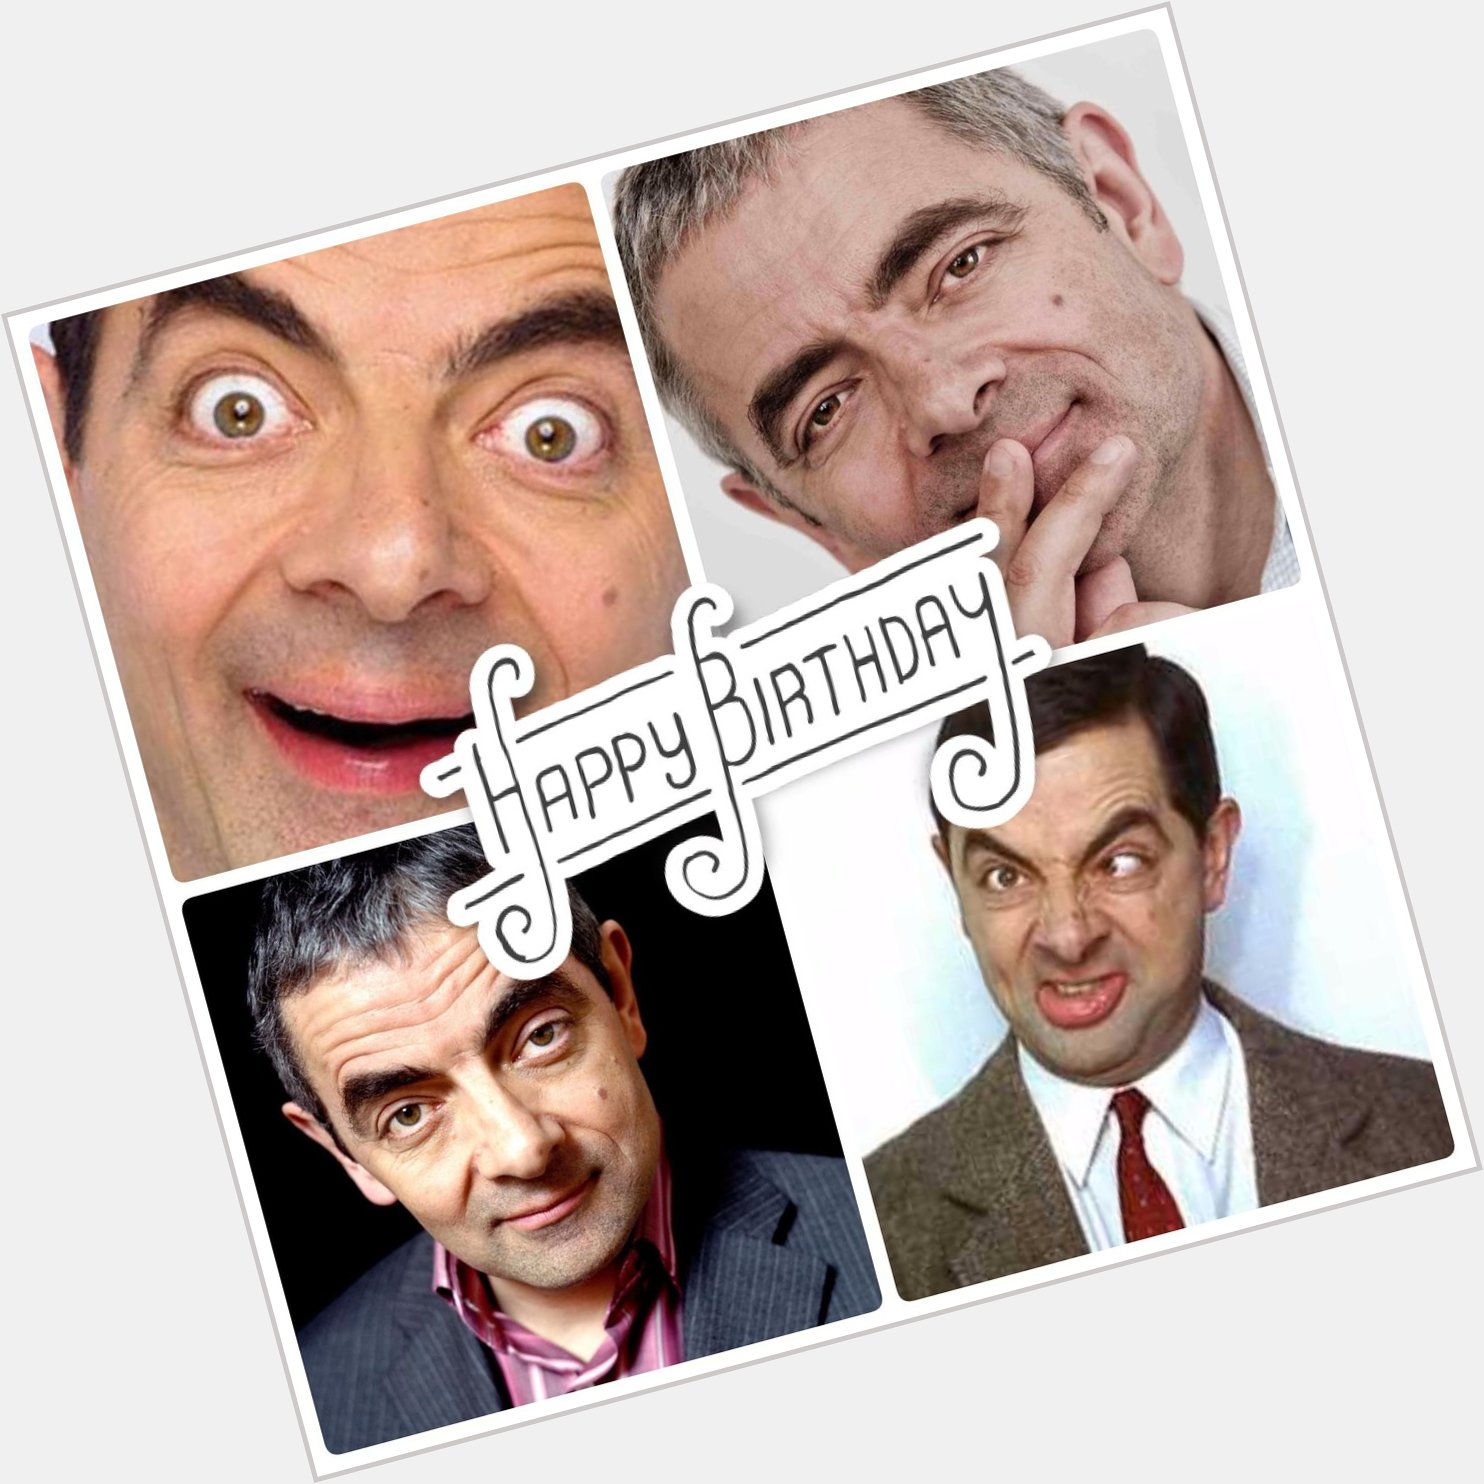 It\s Rowan Atkinson\s Birthday today.
Happy Birthday, Mr. Bean! 